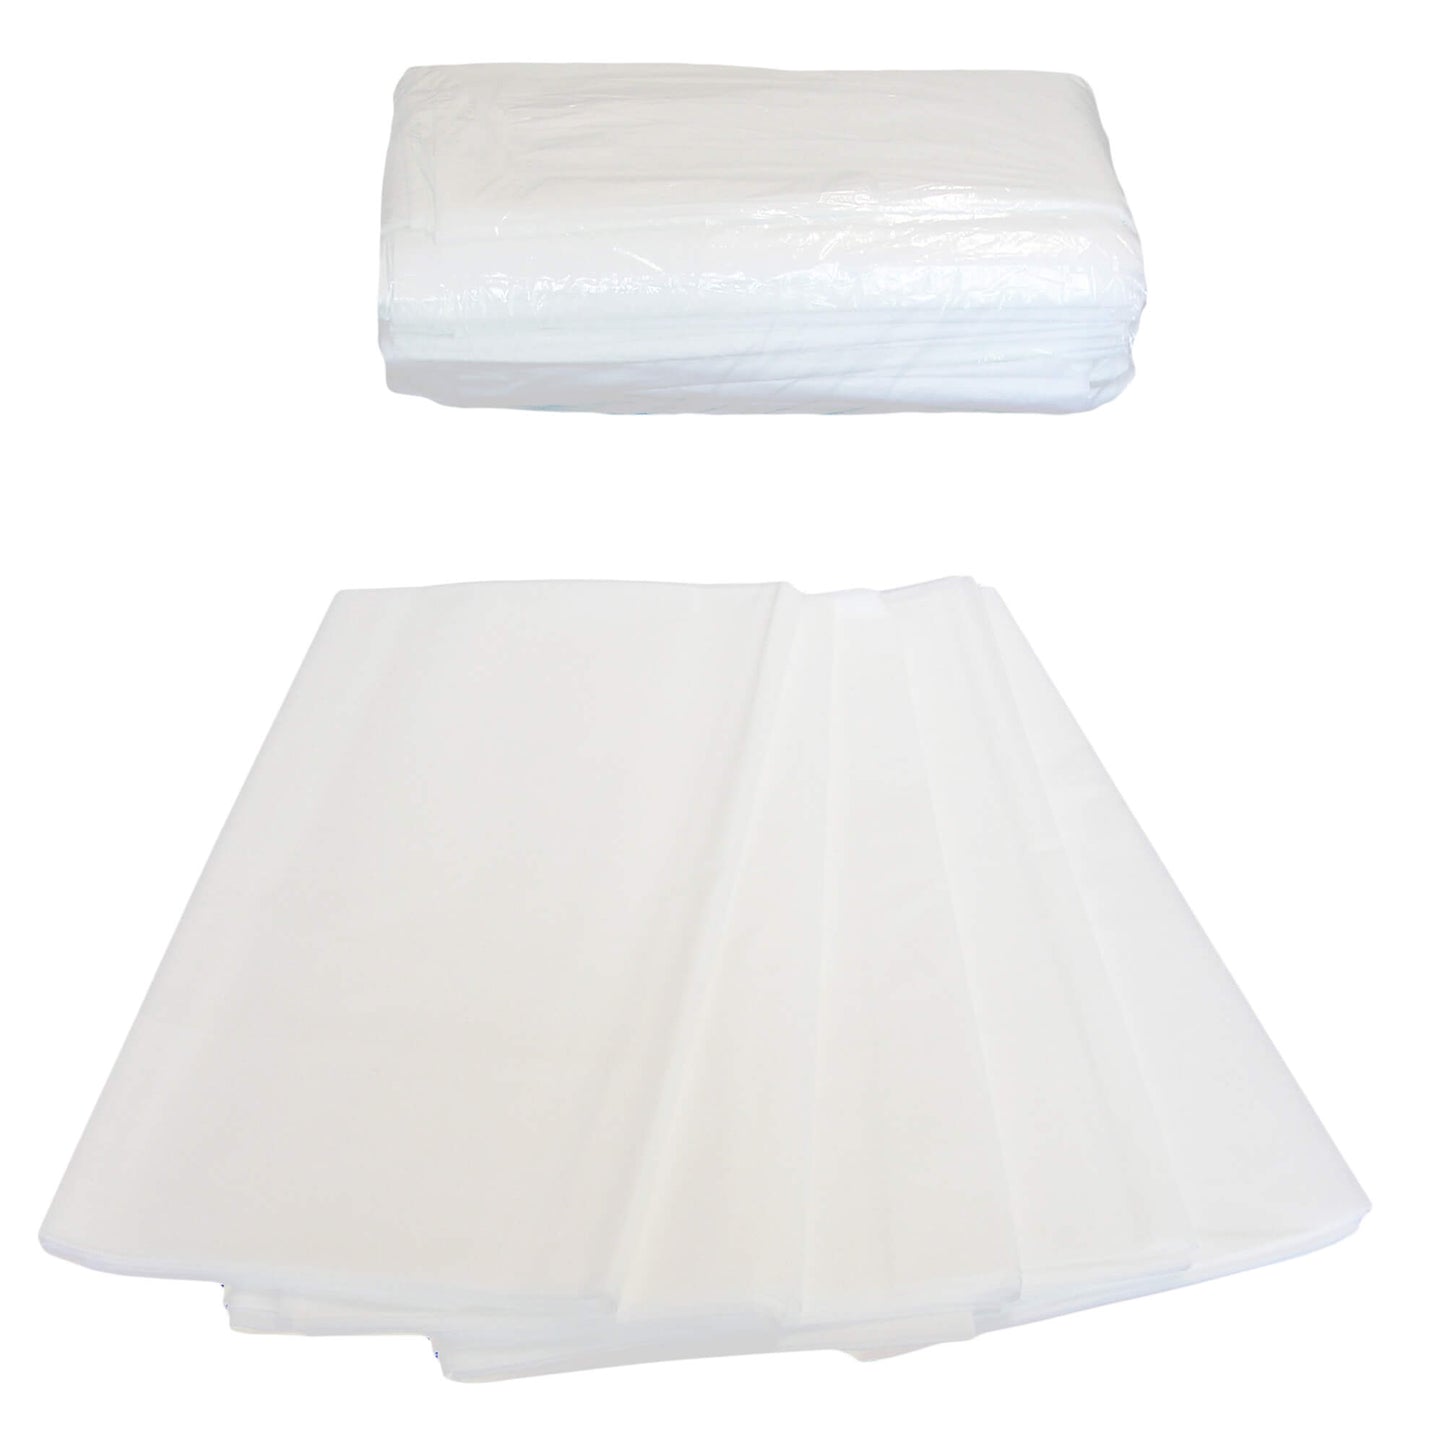 Disposable bed sheets EL2 100x200 cm (laminated)